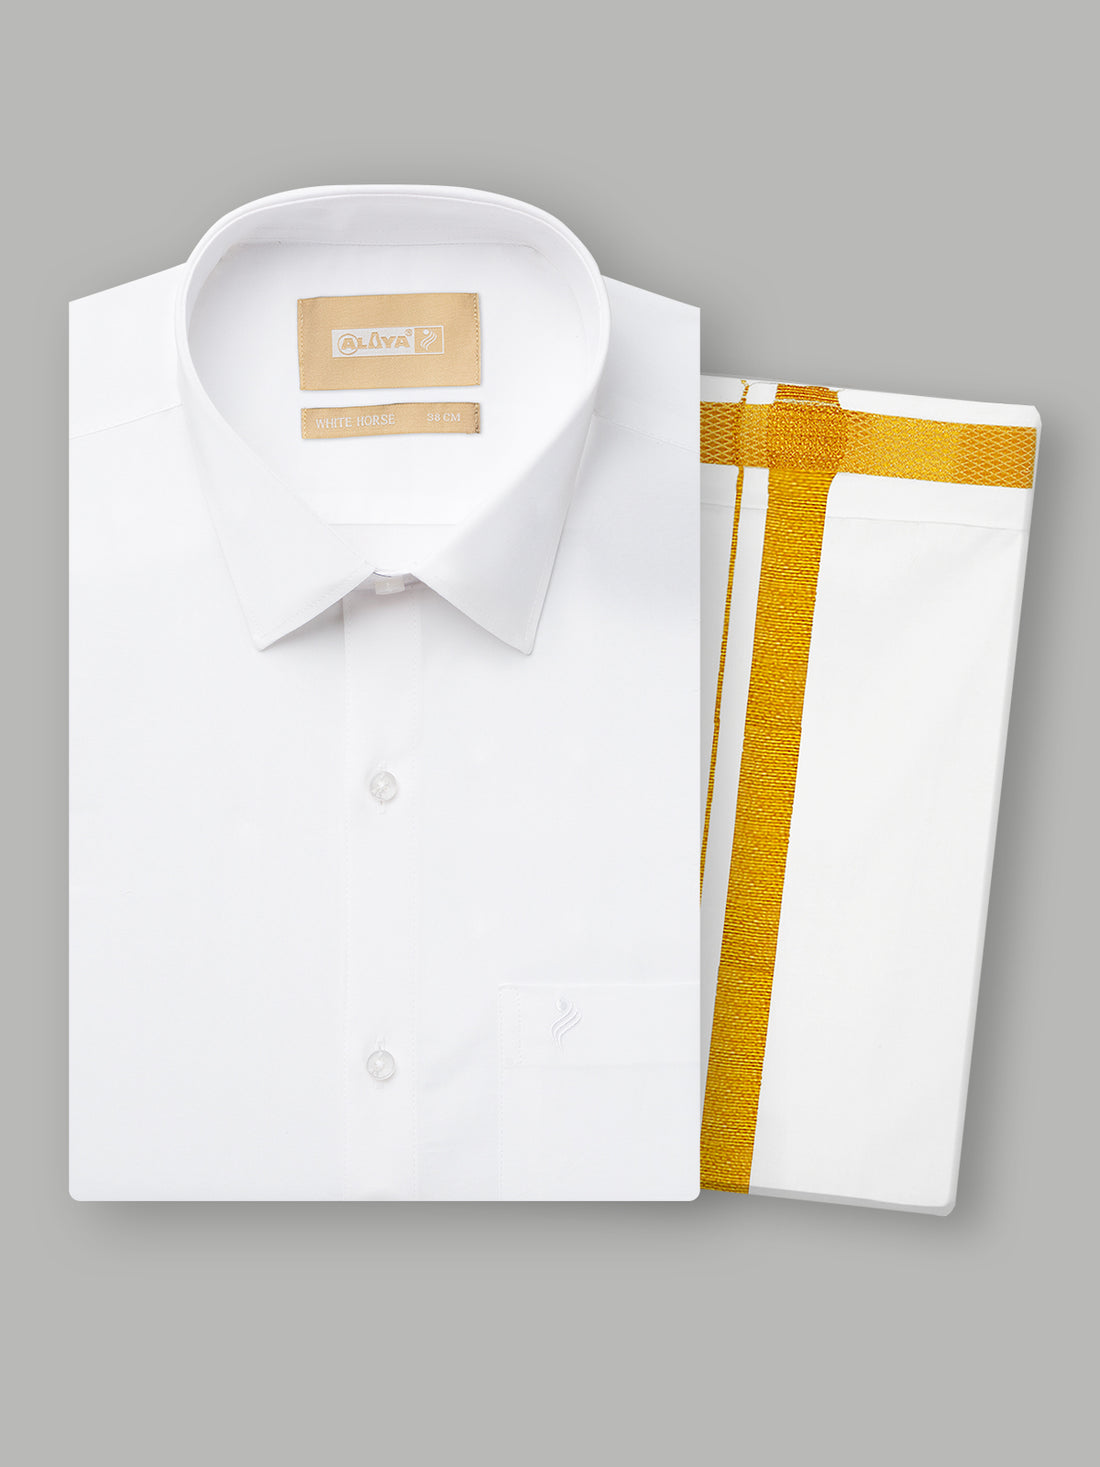 Culture Trendy  Peral White Shirt & Gold Jari Velcro Dhoti 2.0 Mtr ( Pocket Dhoti )